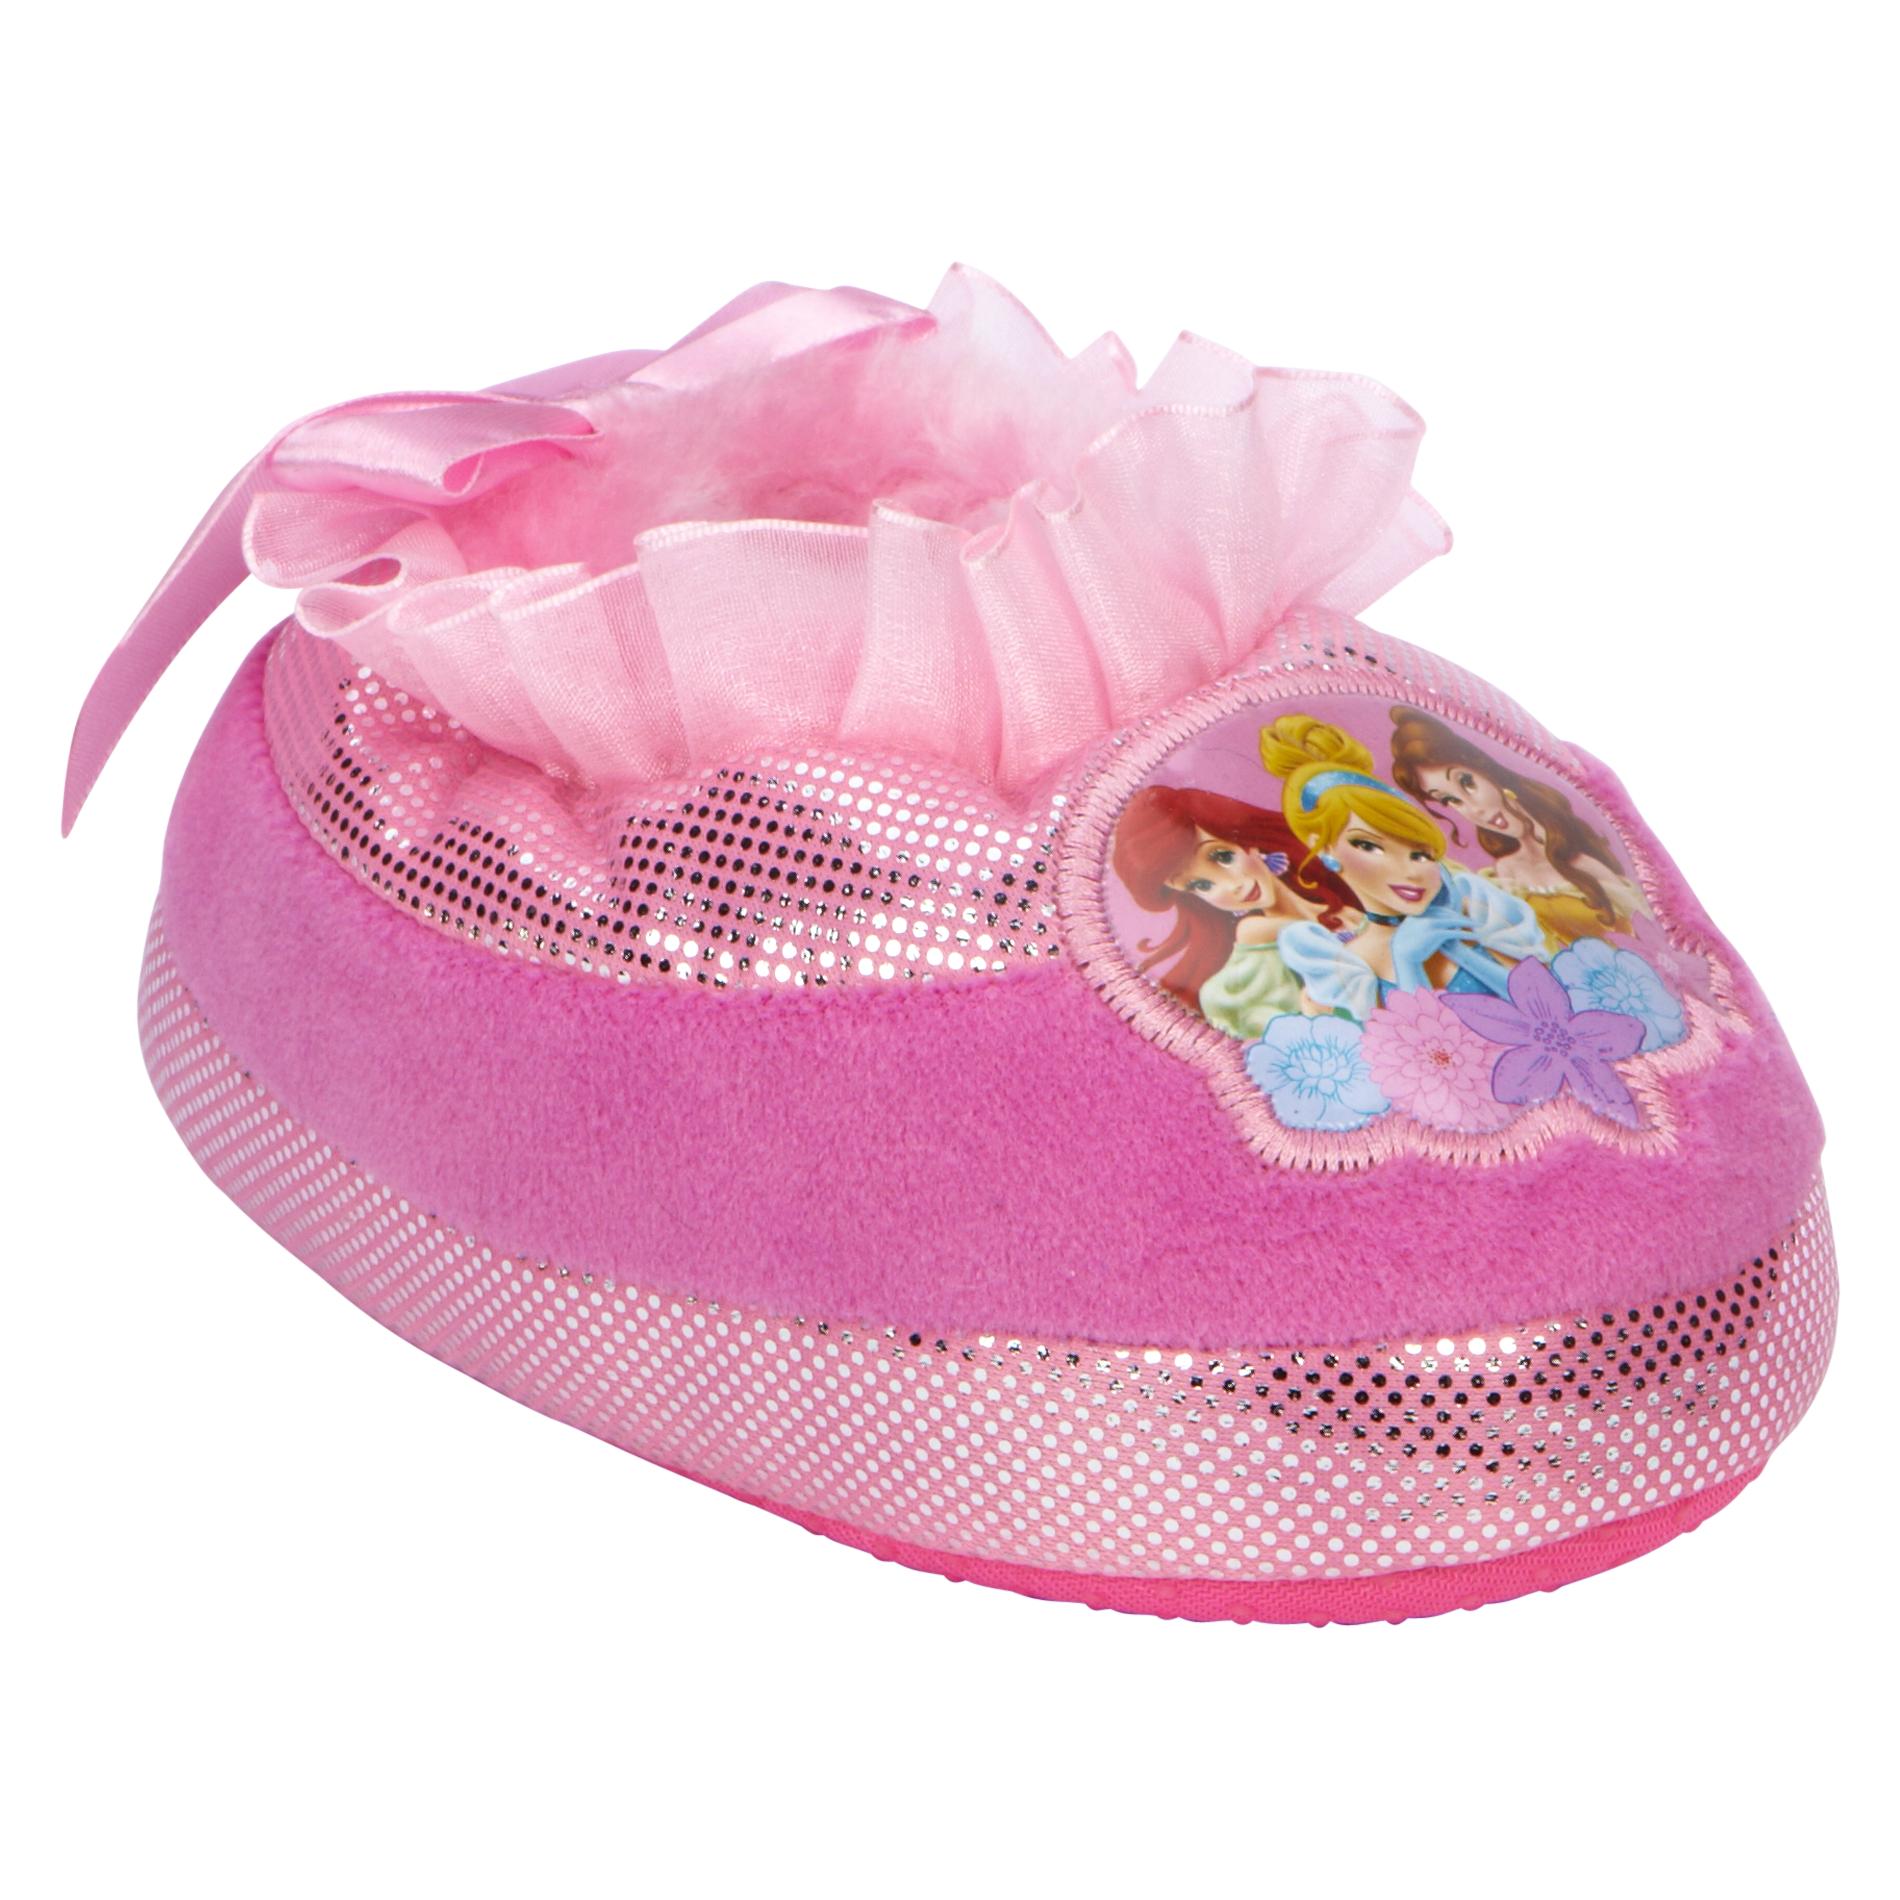 Disney Toddler Girl's Slipper Princesses - Pink